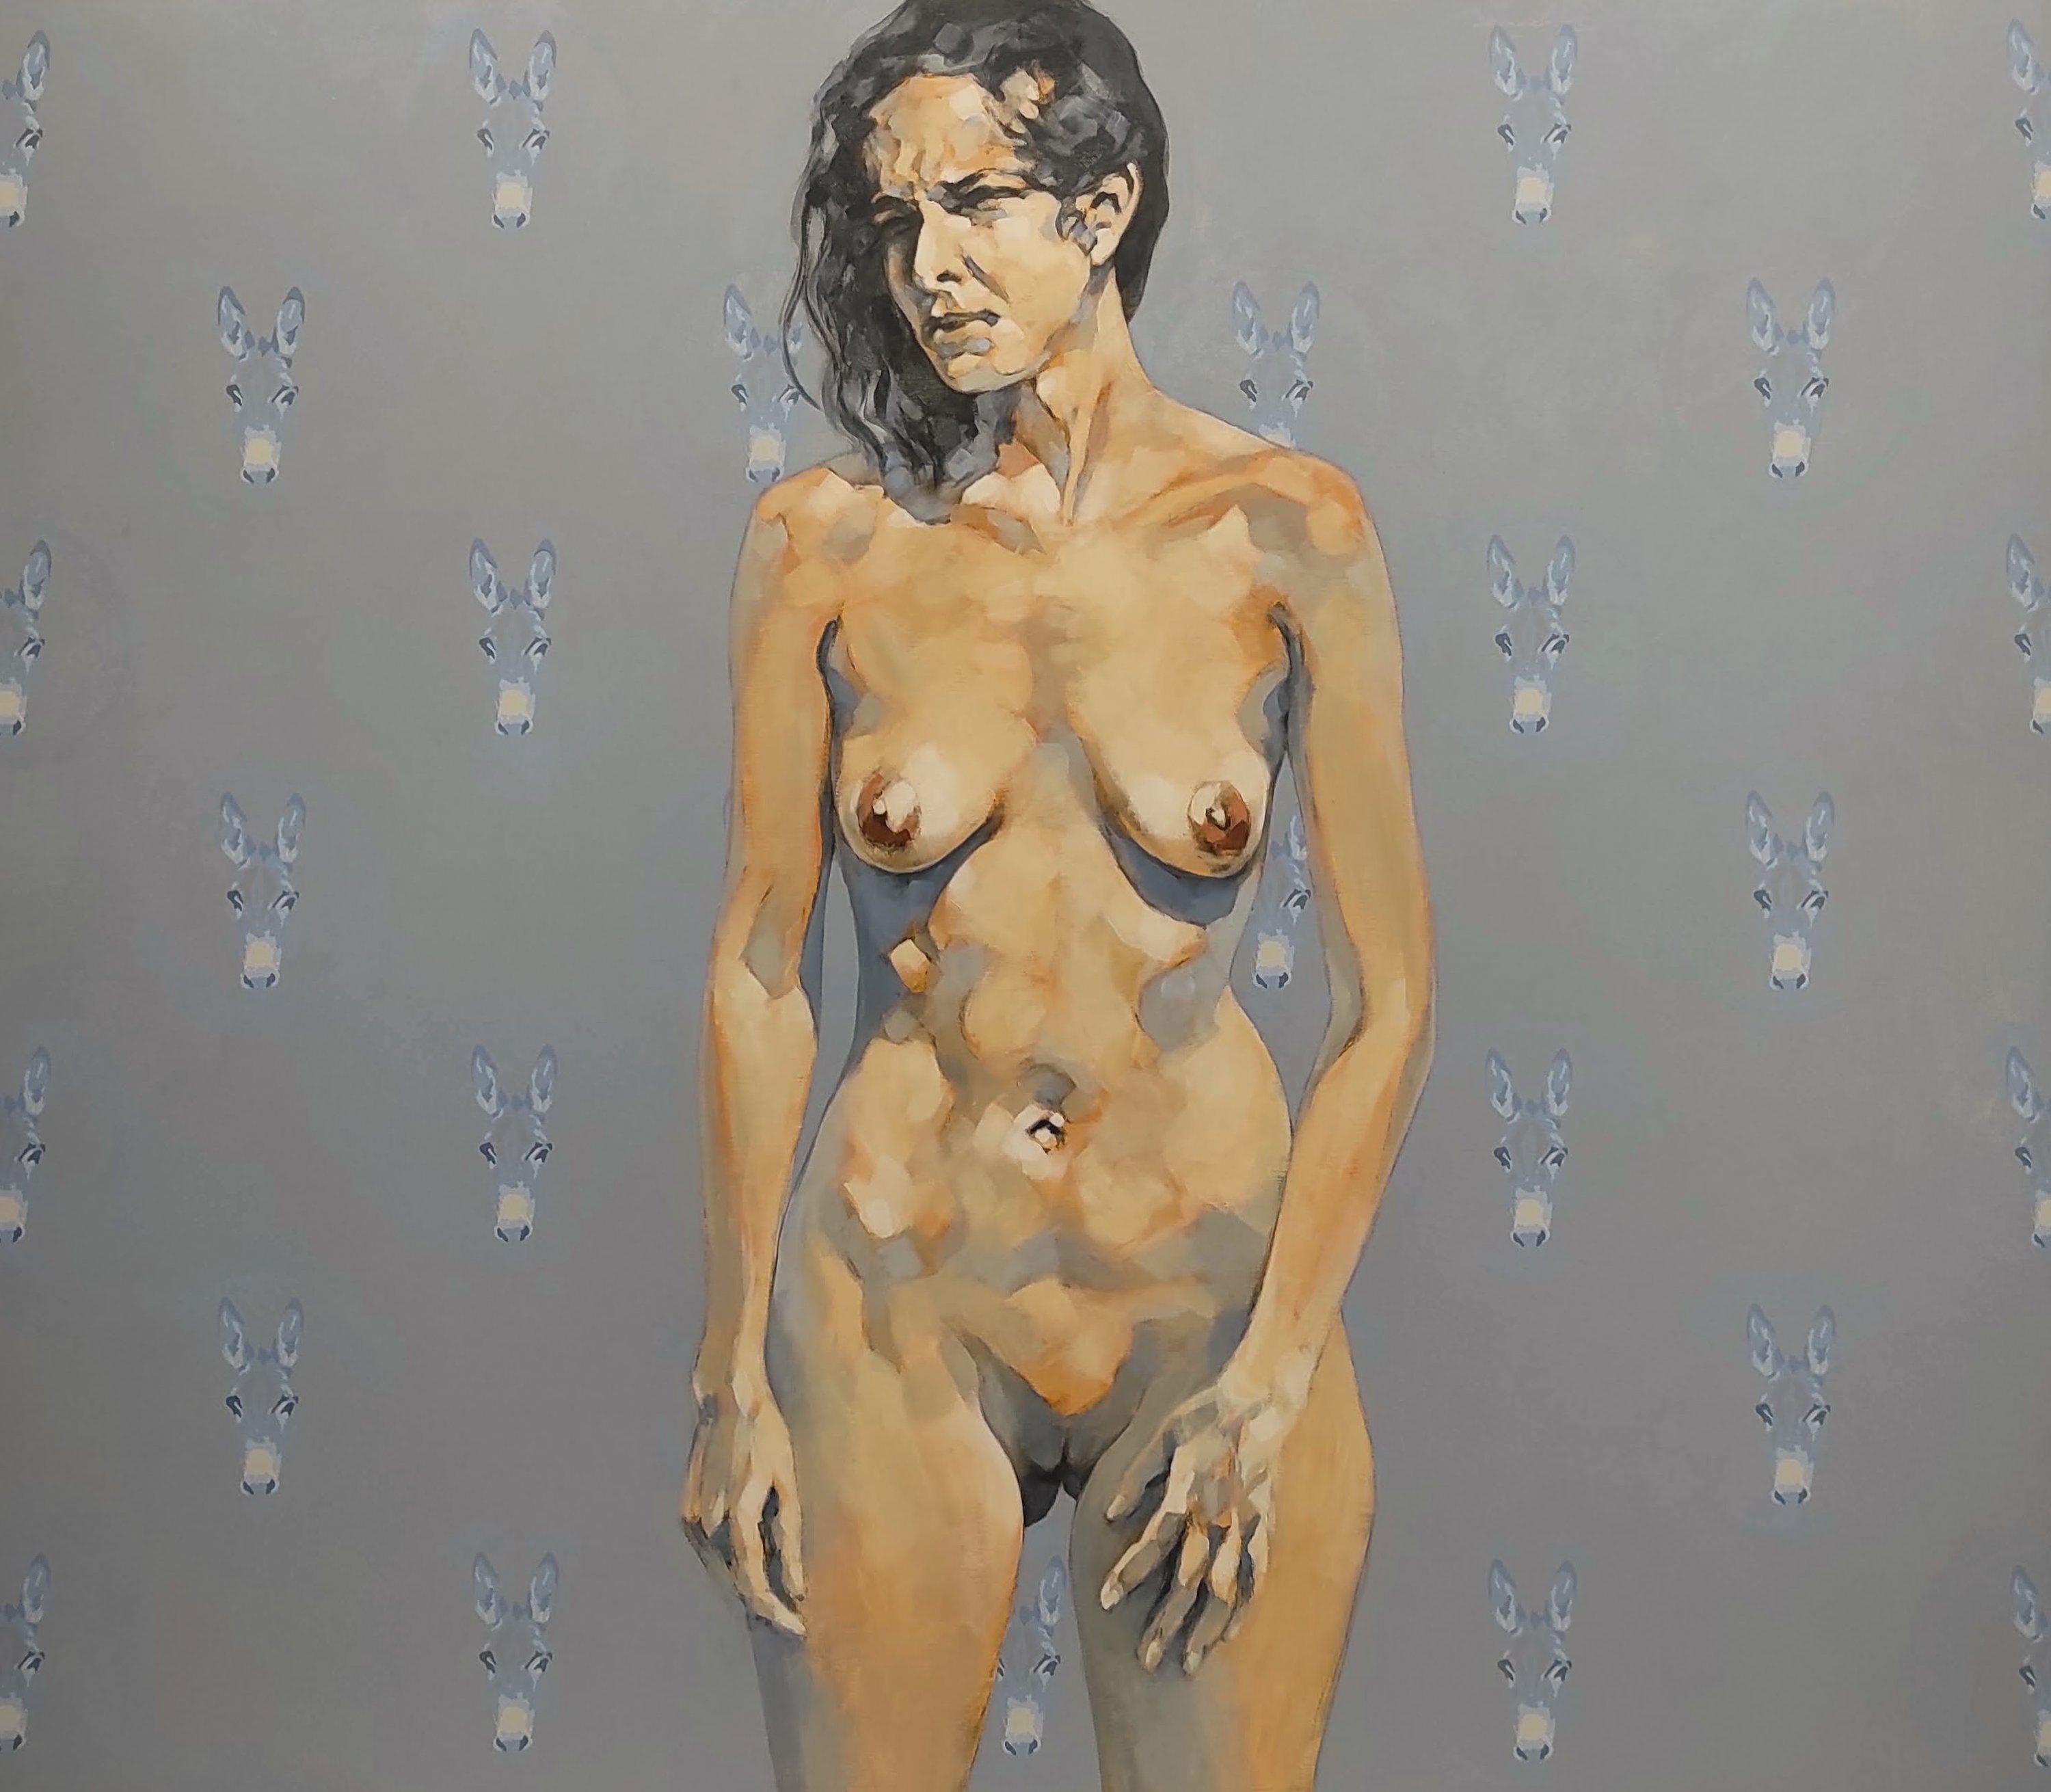 Nude Painting Pep Anton Xaus - Américain People III - 21e siècle, figuratif, nu, corps féminin, féminisme, acrylique